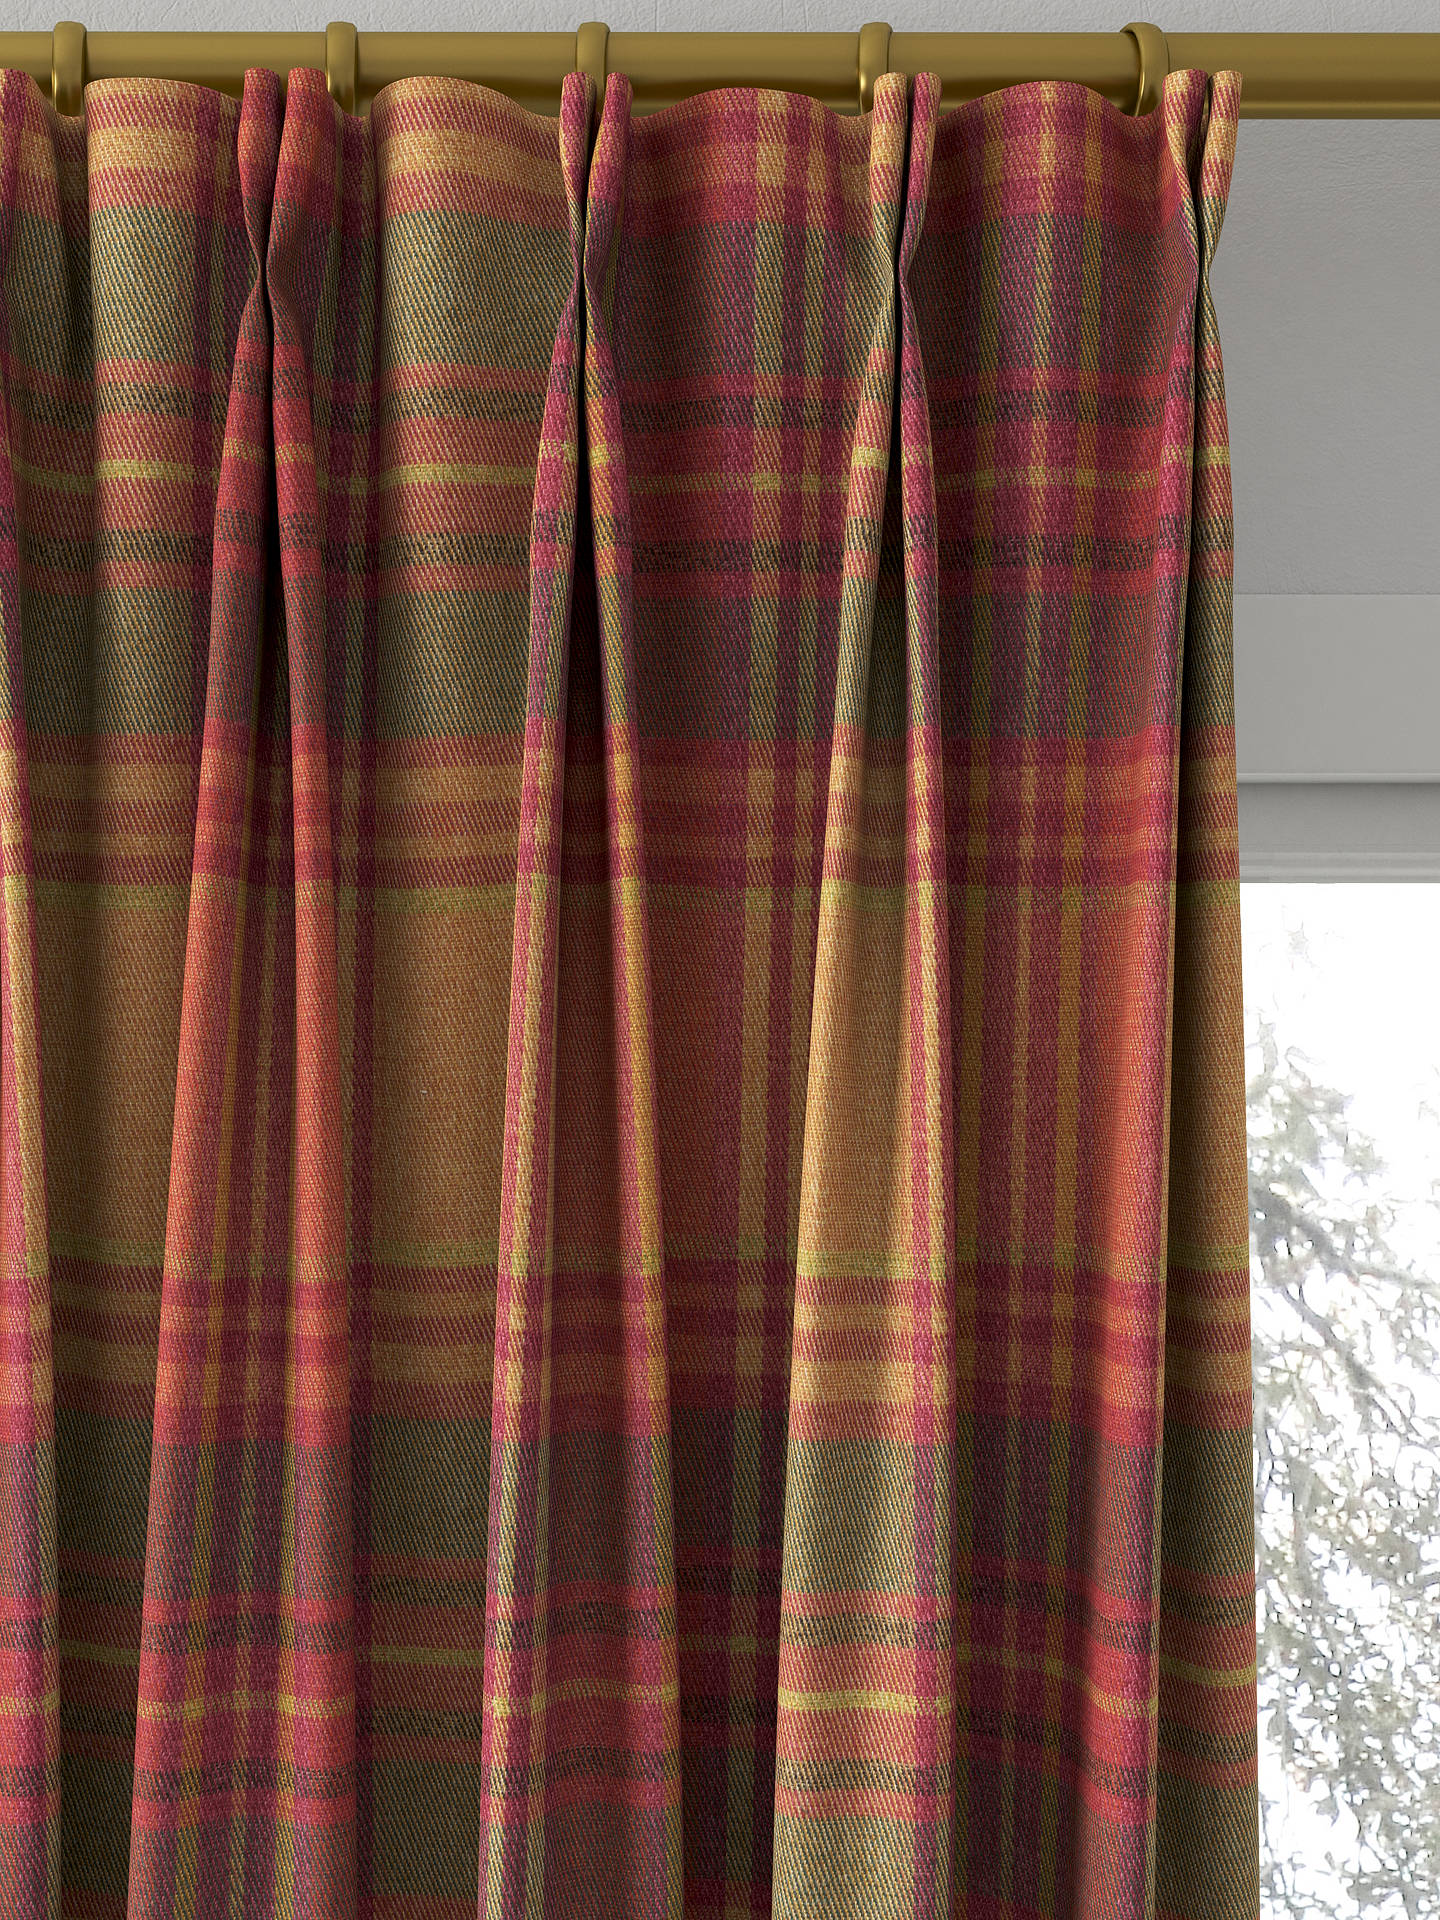 Prestigious Textiles Strathmore Made to Measure Curtains, Rustic